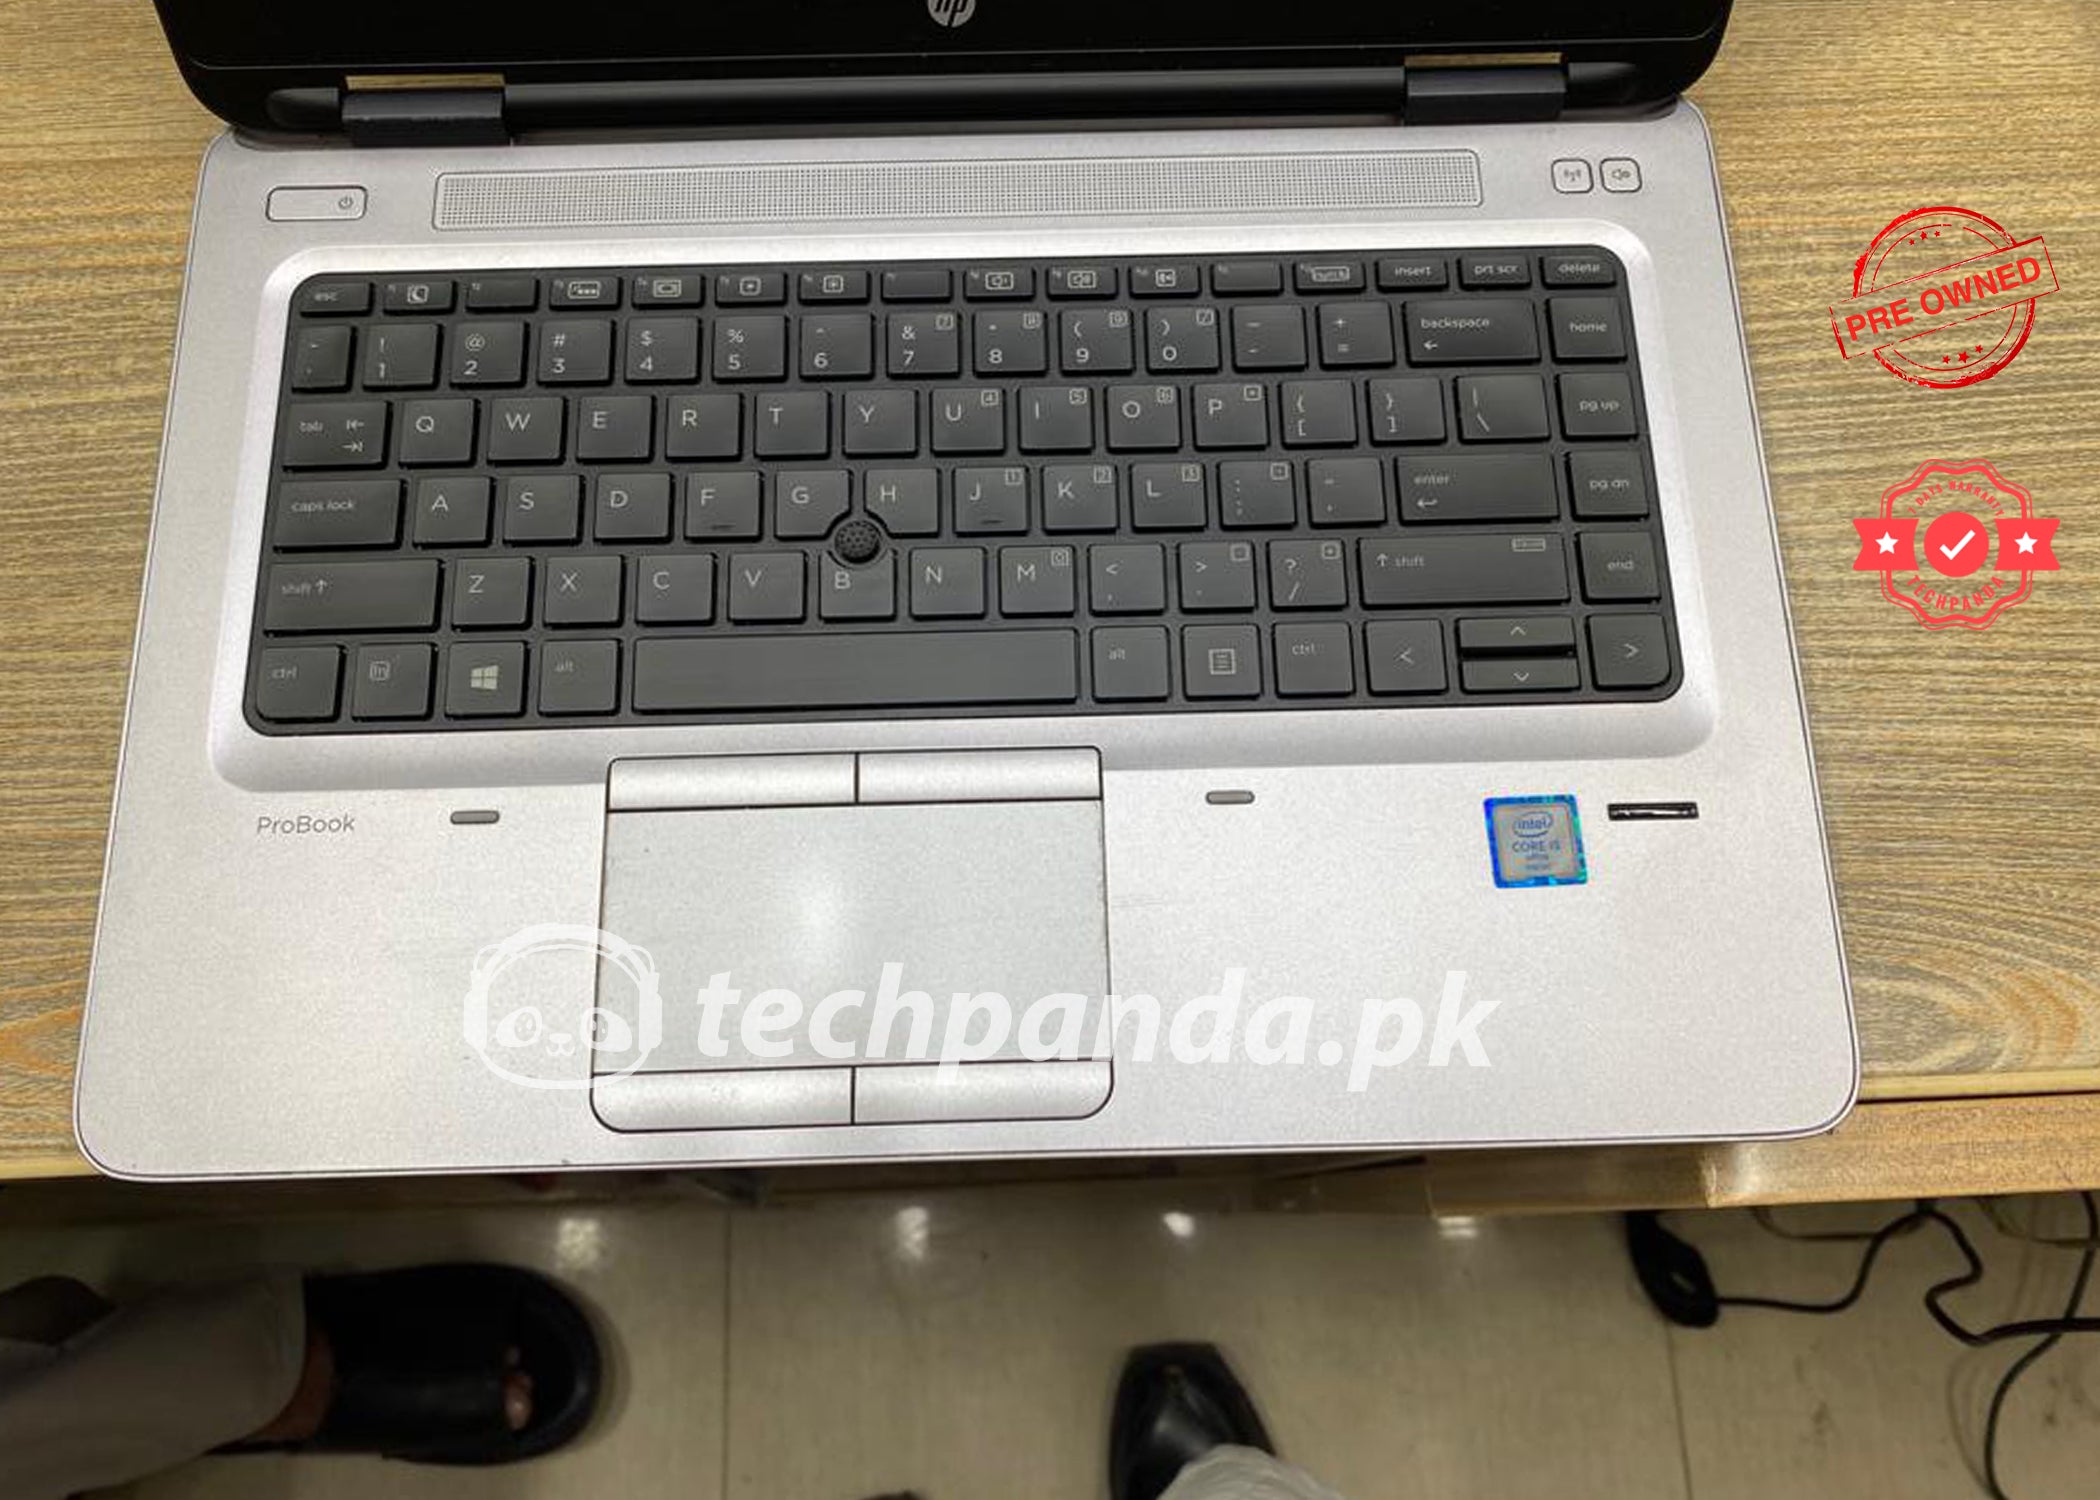 HP ProBook 640 G1 Laptop i5 4th Gen 8GB RAM 500GB Hard Drive 14″ Display (USED)